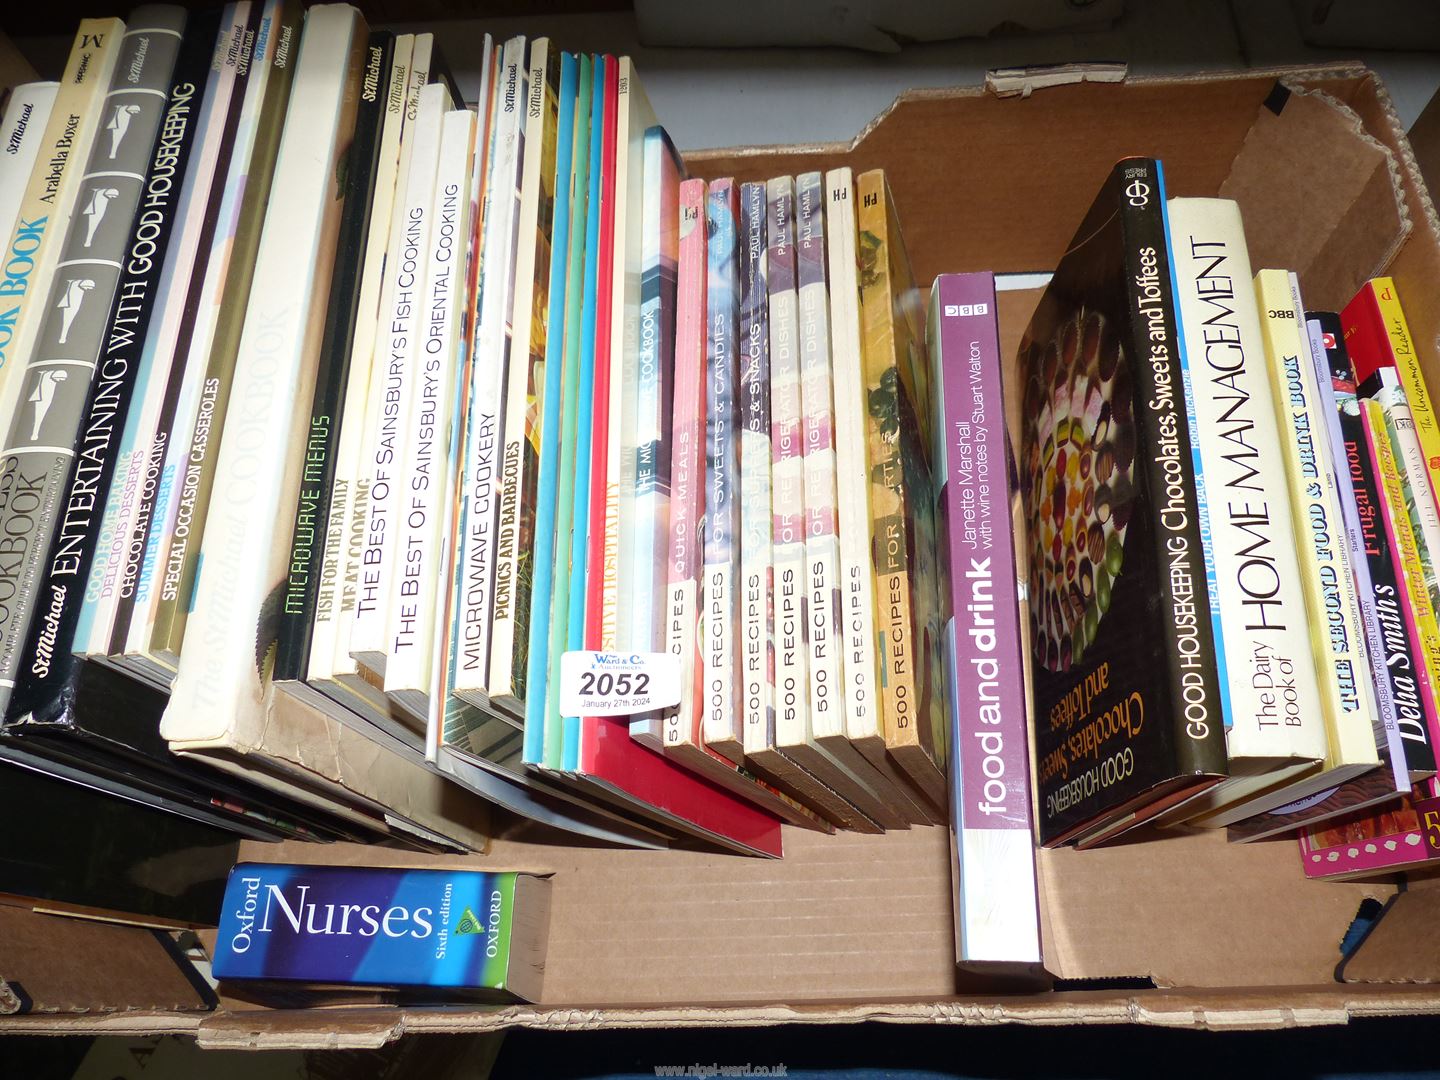 A quantity of cookbooks and home management books.